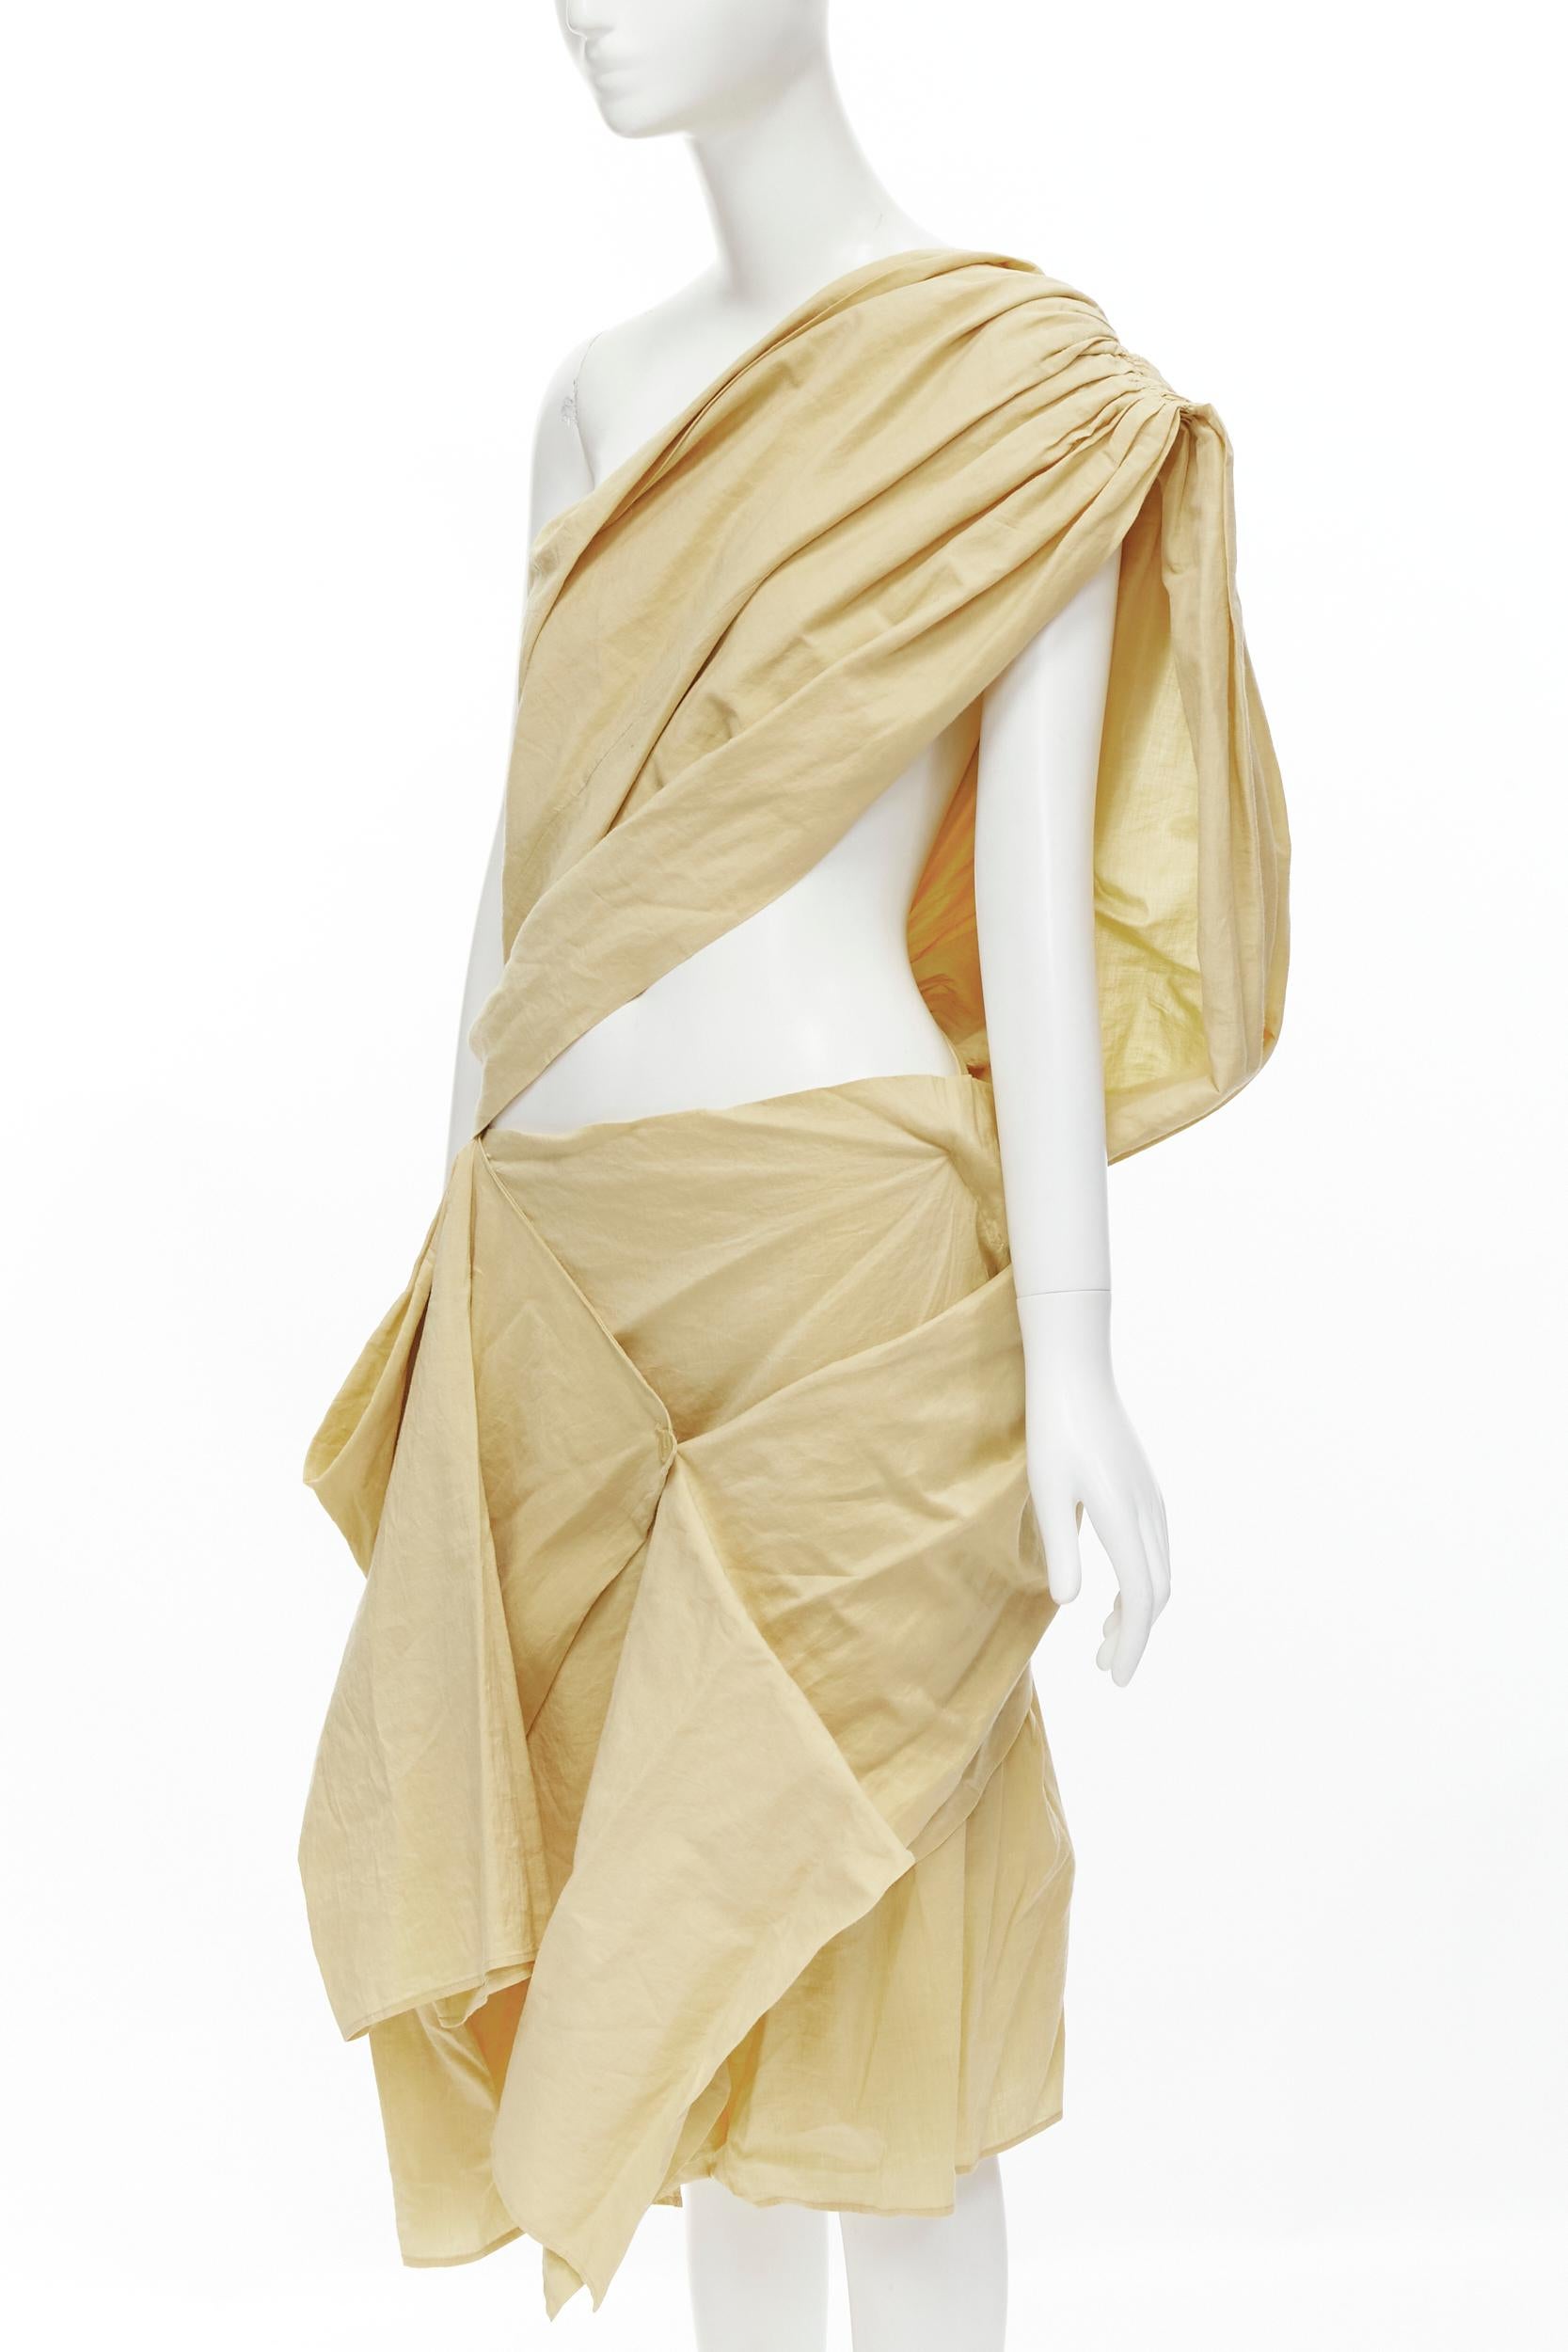 YOHJI YAMAMOTO Vintage 1980s beige draped panel skirt wrap sash dress M 1